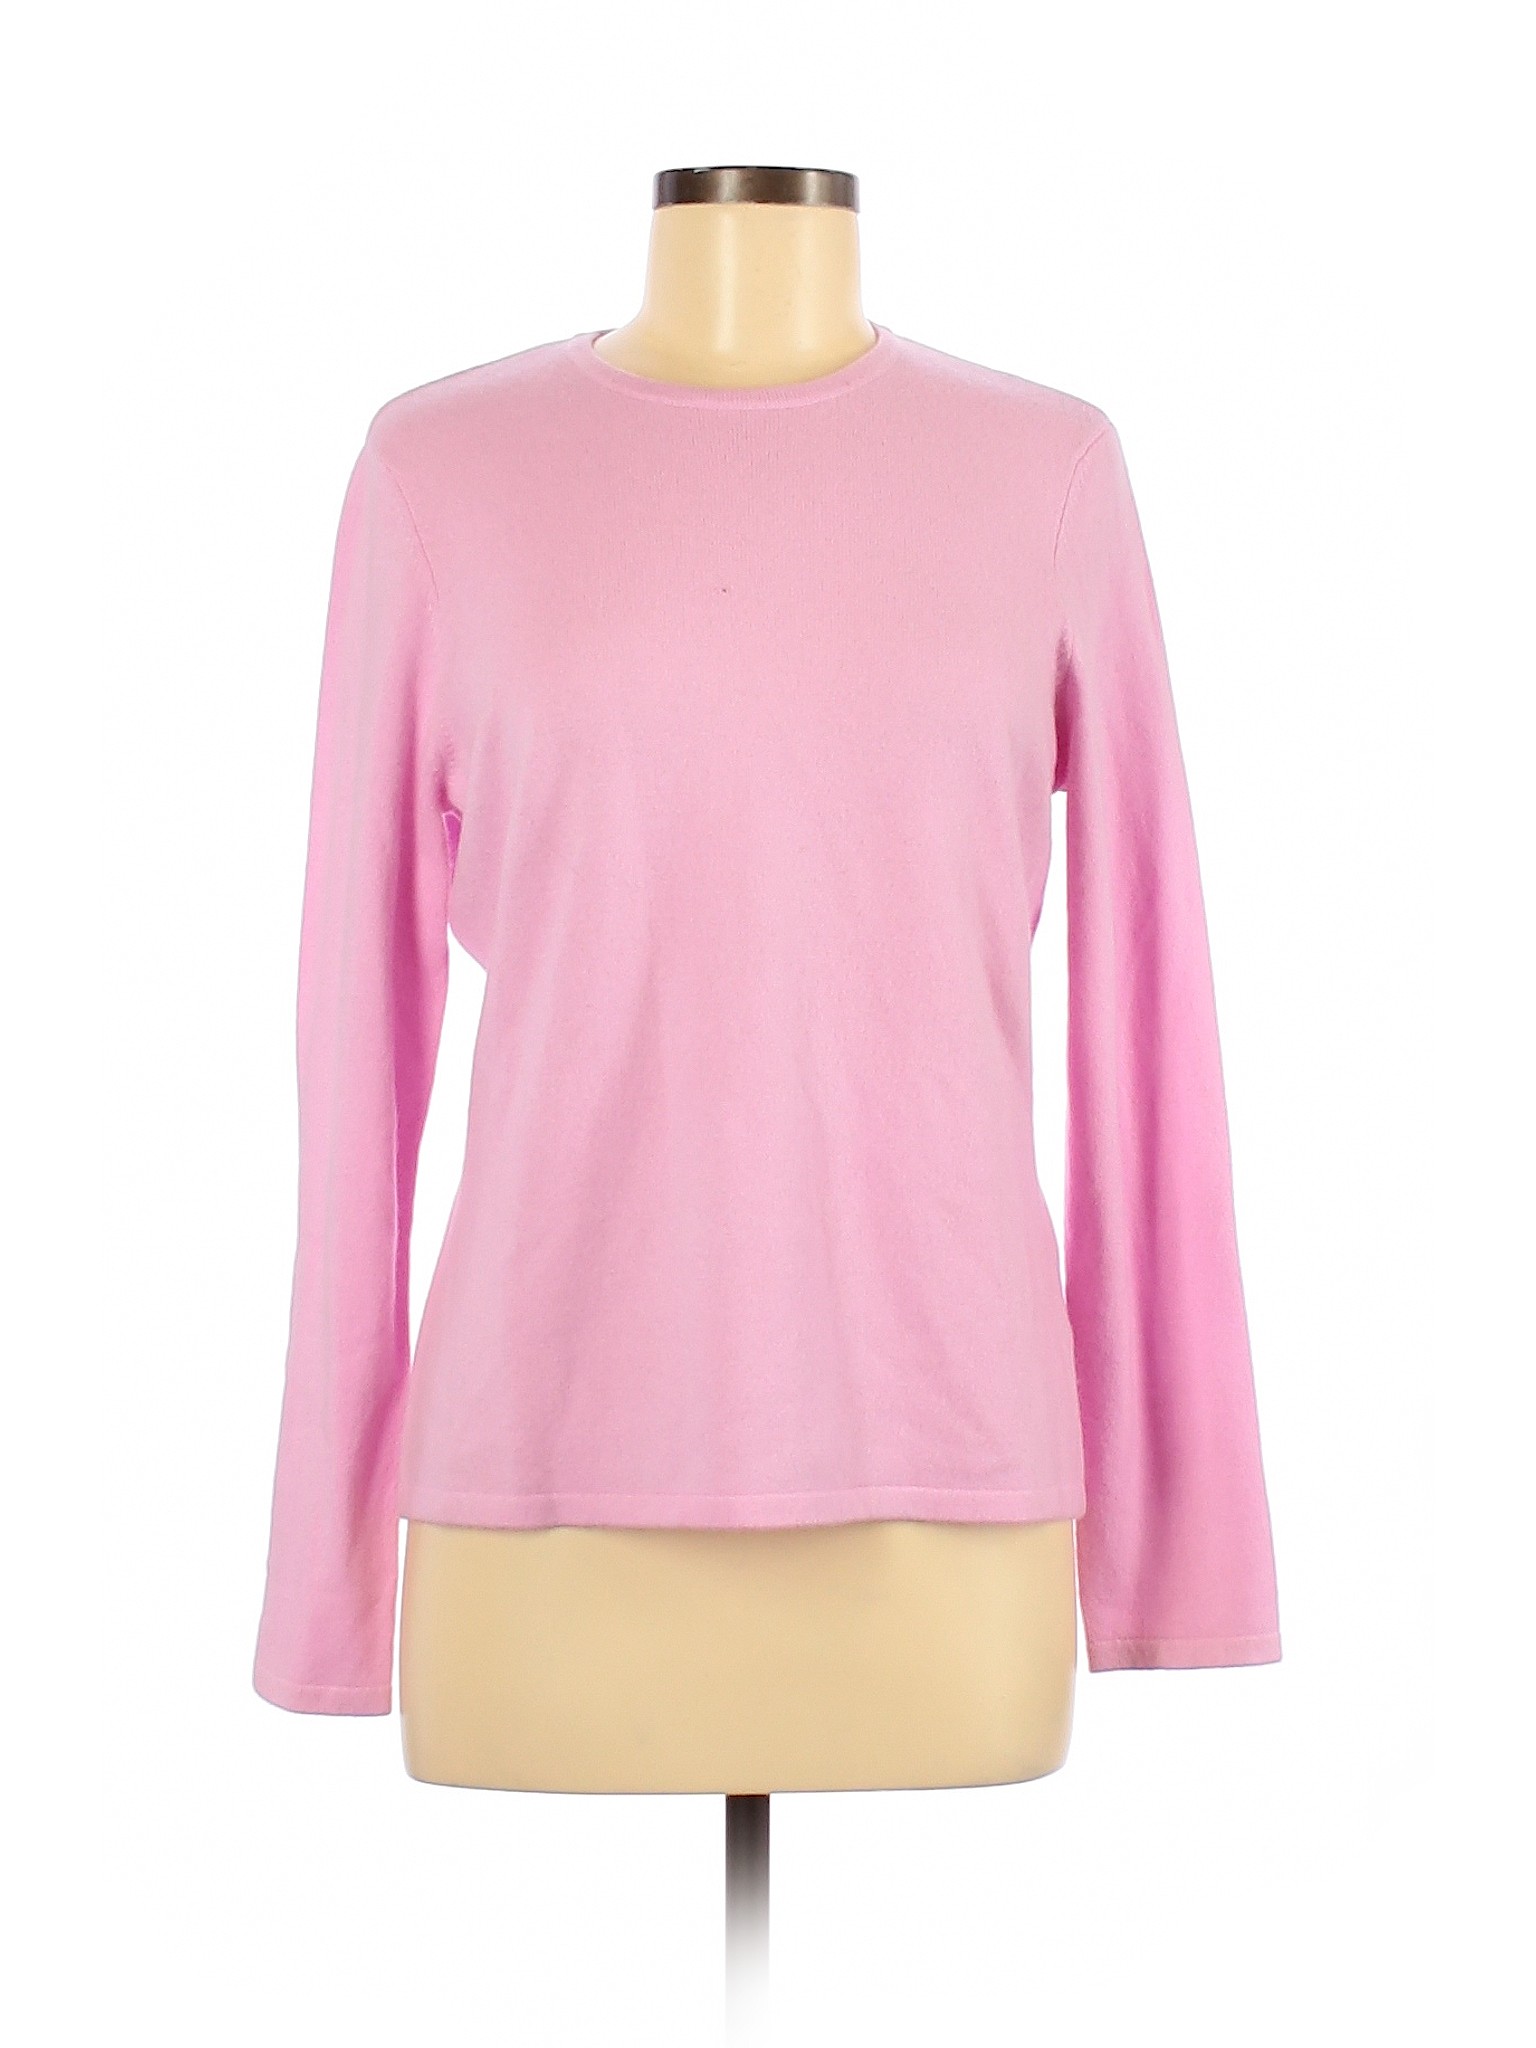 Lands' End Women Pink Sweatshirt M | eBay